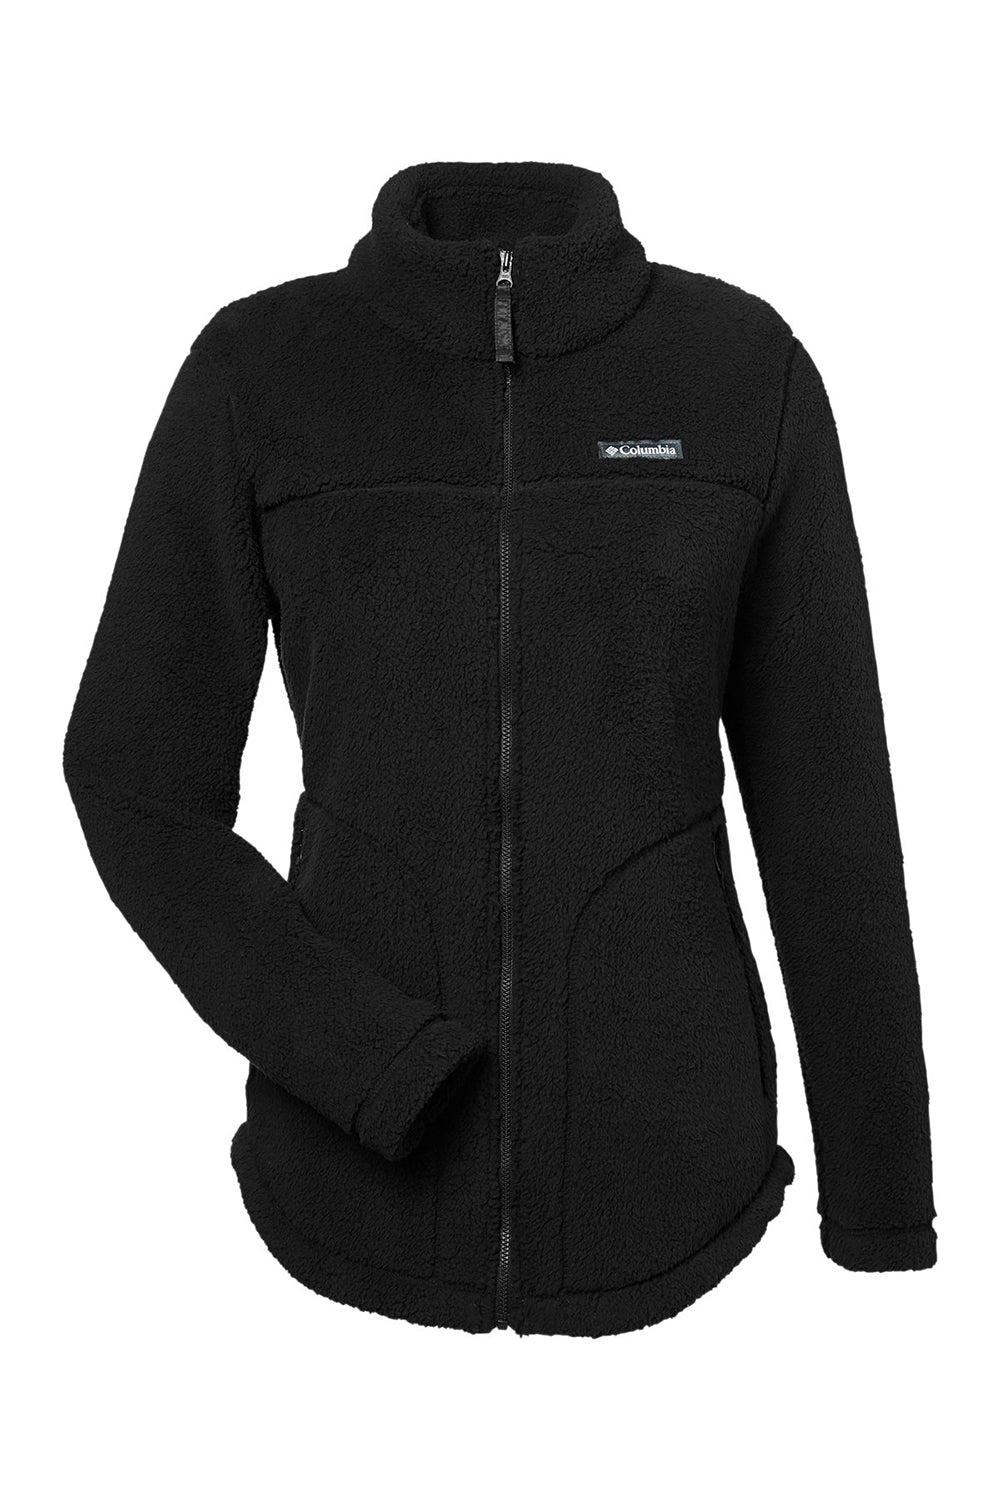 Columbia 1939901 Womens West Bend Sherpa Fleece Full Zip Jacket Black Flat Front